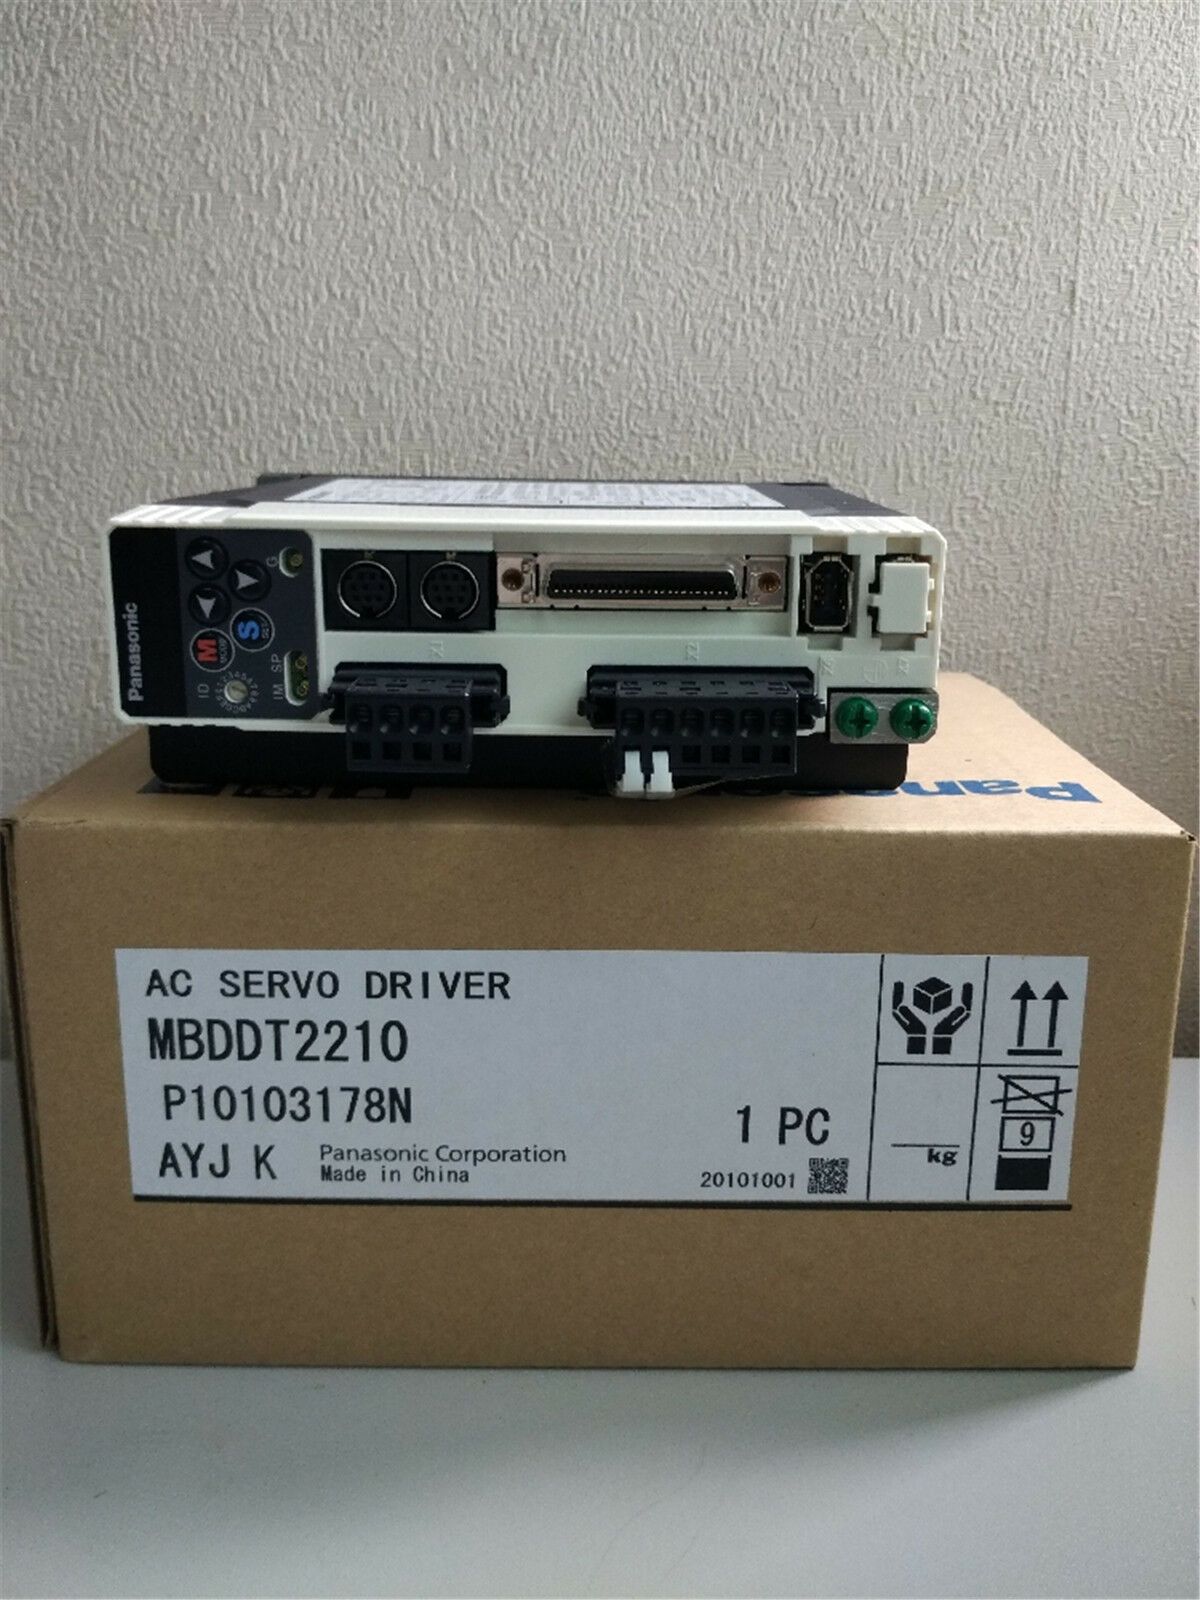 New Panasonic Servo Drive MBDDT2210